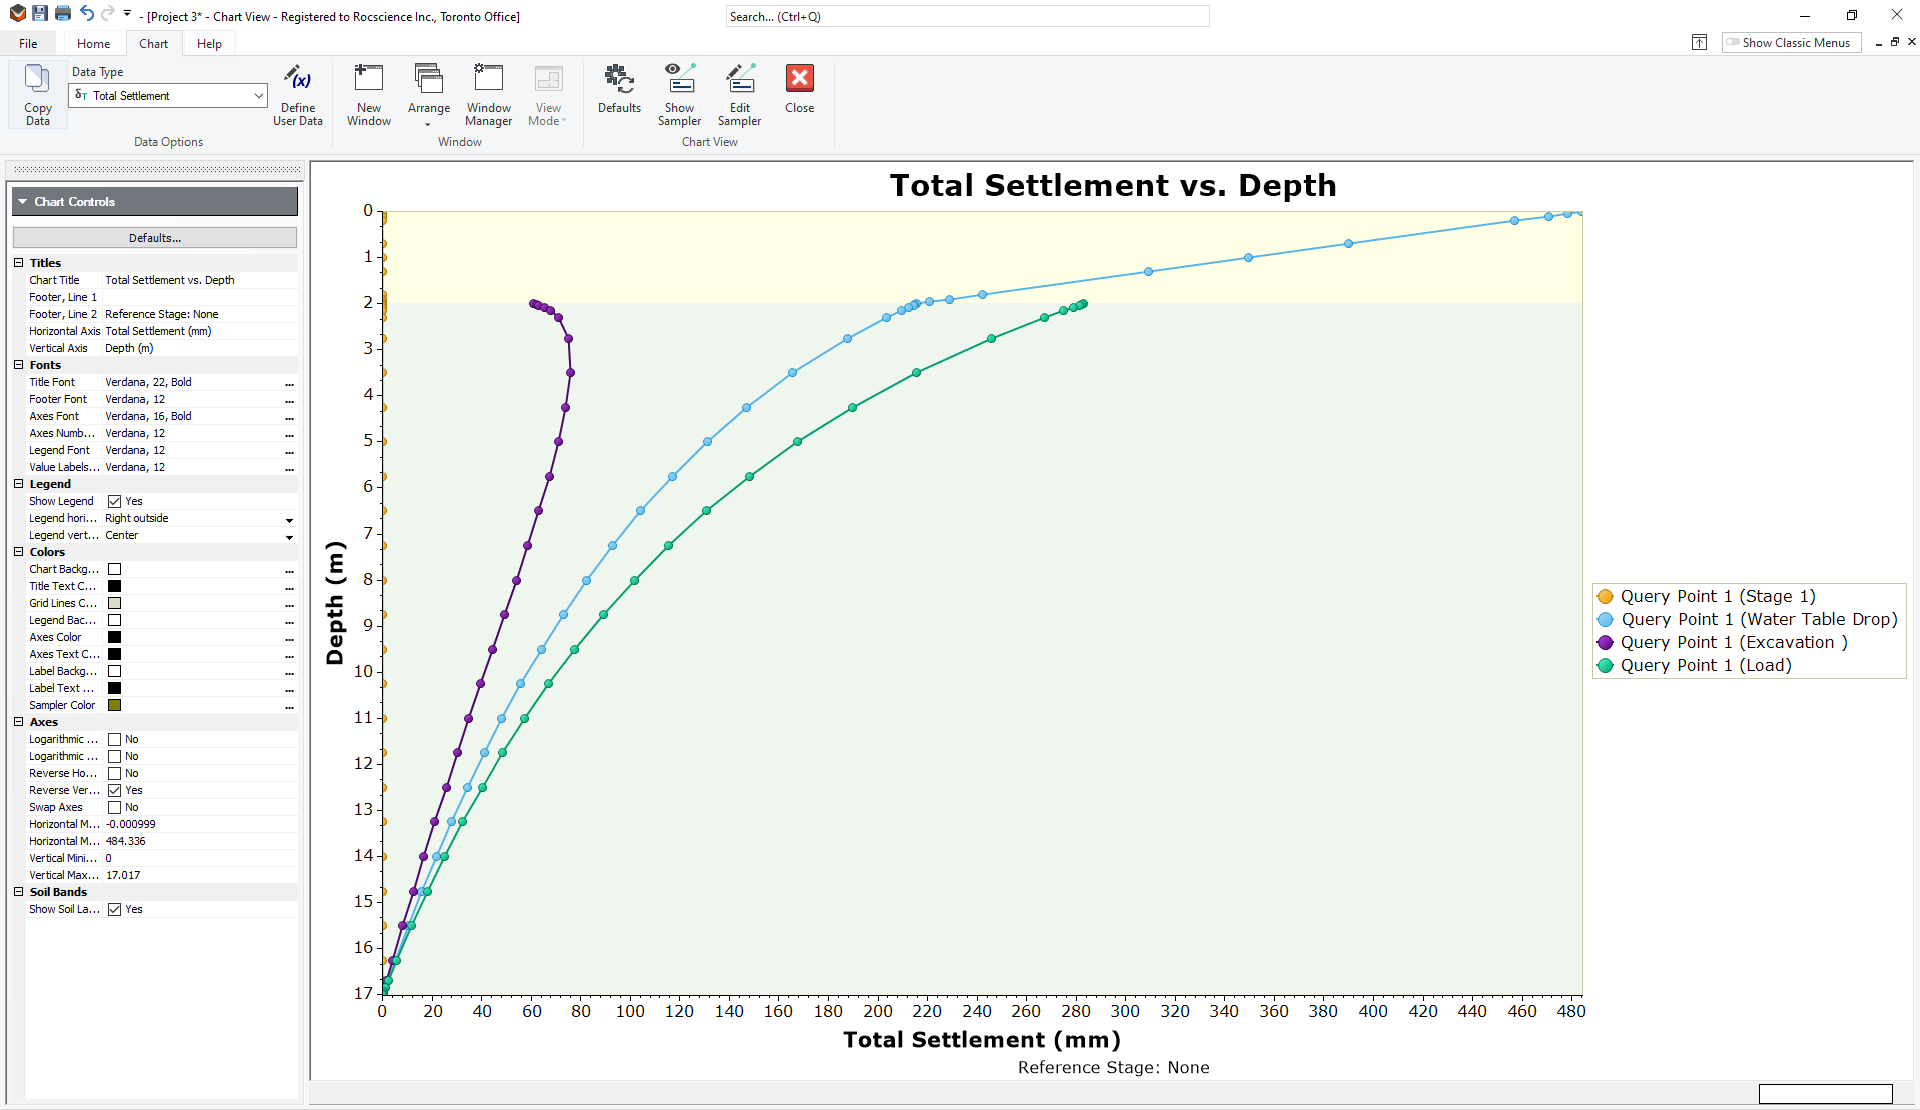 Time versus Total Settlement Graph